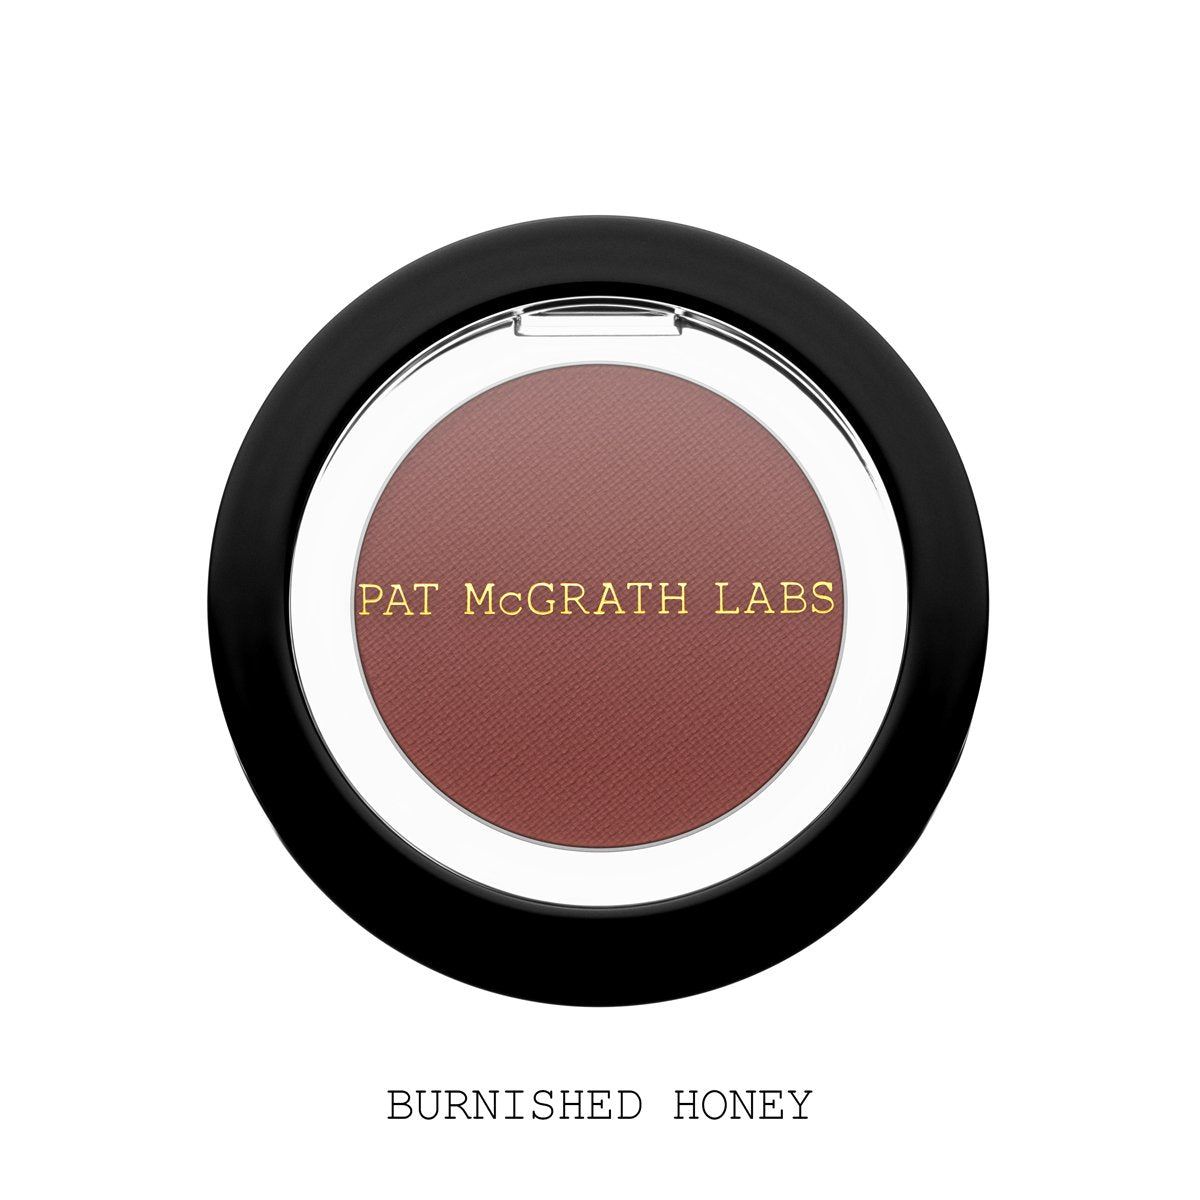 Pat McGrath EYEDOLS™ Matte Eye Shadow - Burnished Honey (Mahogany Suede)